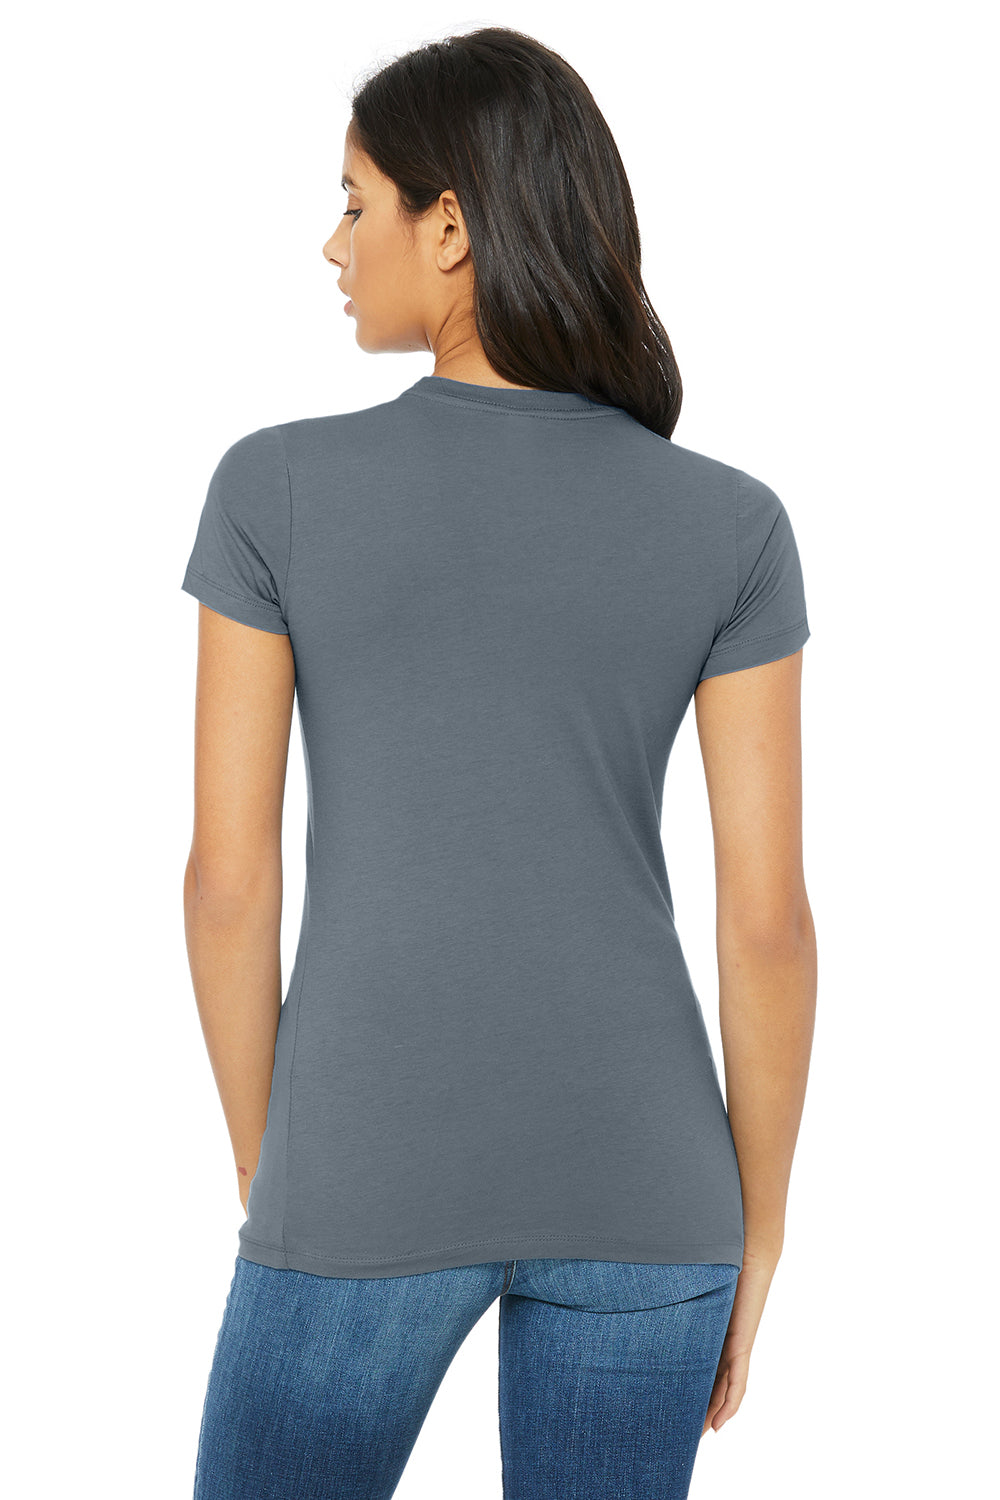 Bella + Canvas 6004 Womens The Favorite Short Sleeve Crewneck T-Shirt Steel Blue Back